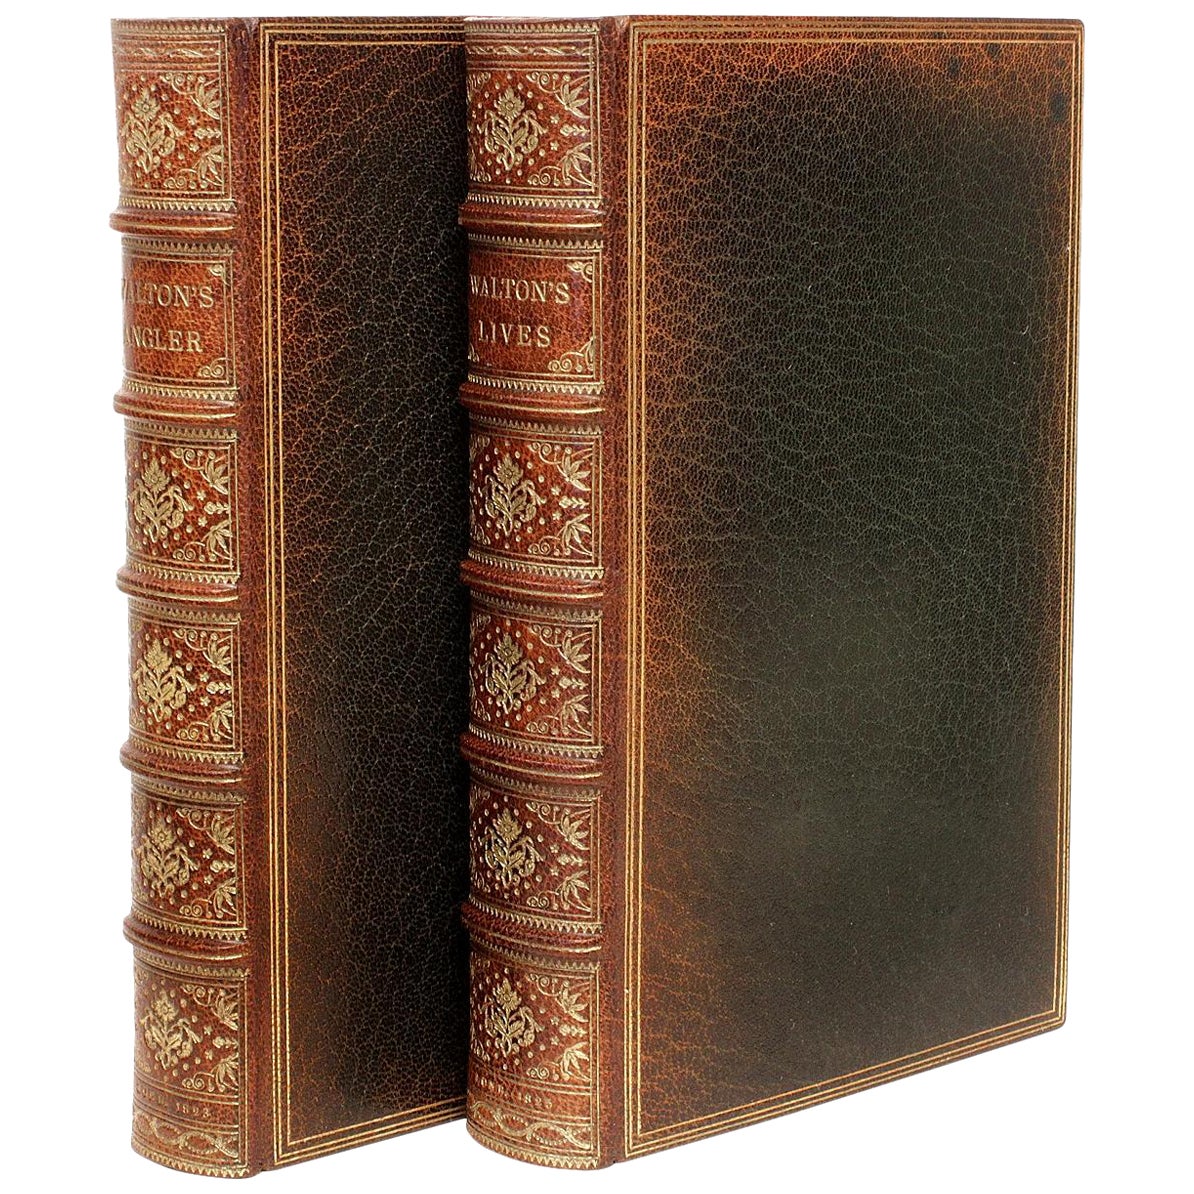 Izaak Walton, Complete Angler & Lives of John Donne - Premières éditions de John Major